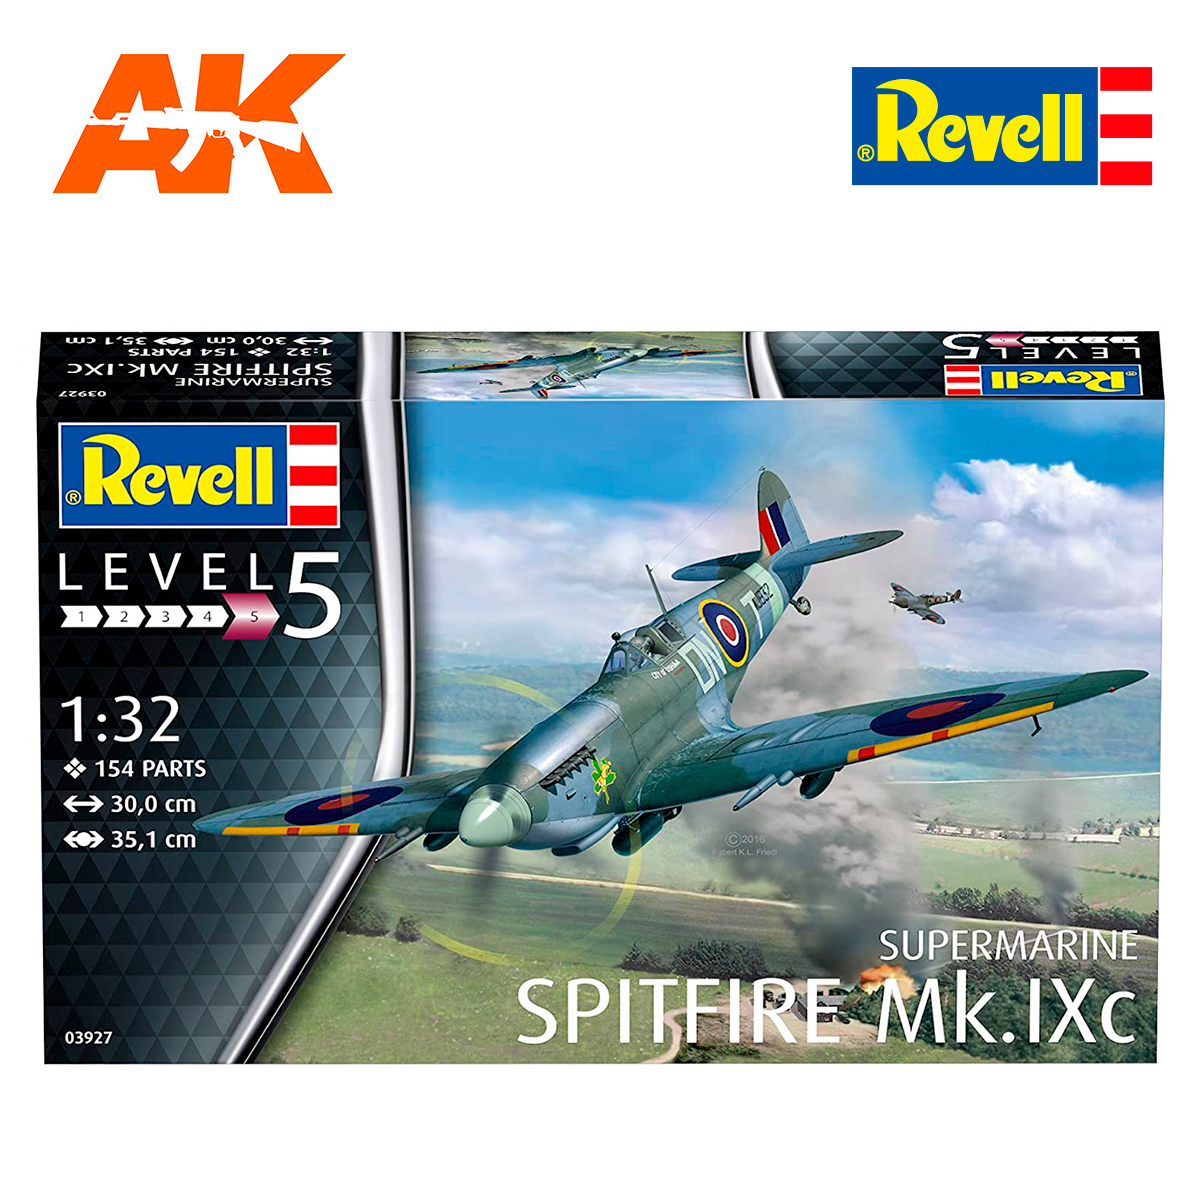 Supermarine Spitfire Mk.IXc 1/32